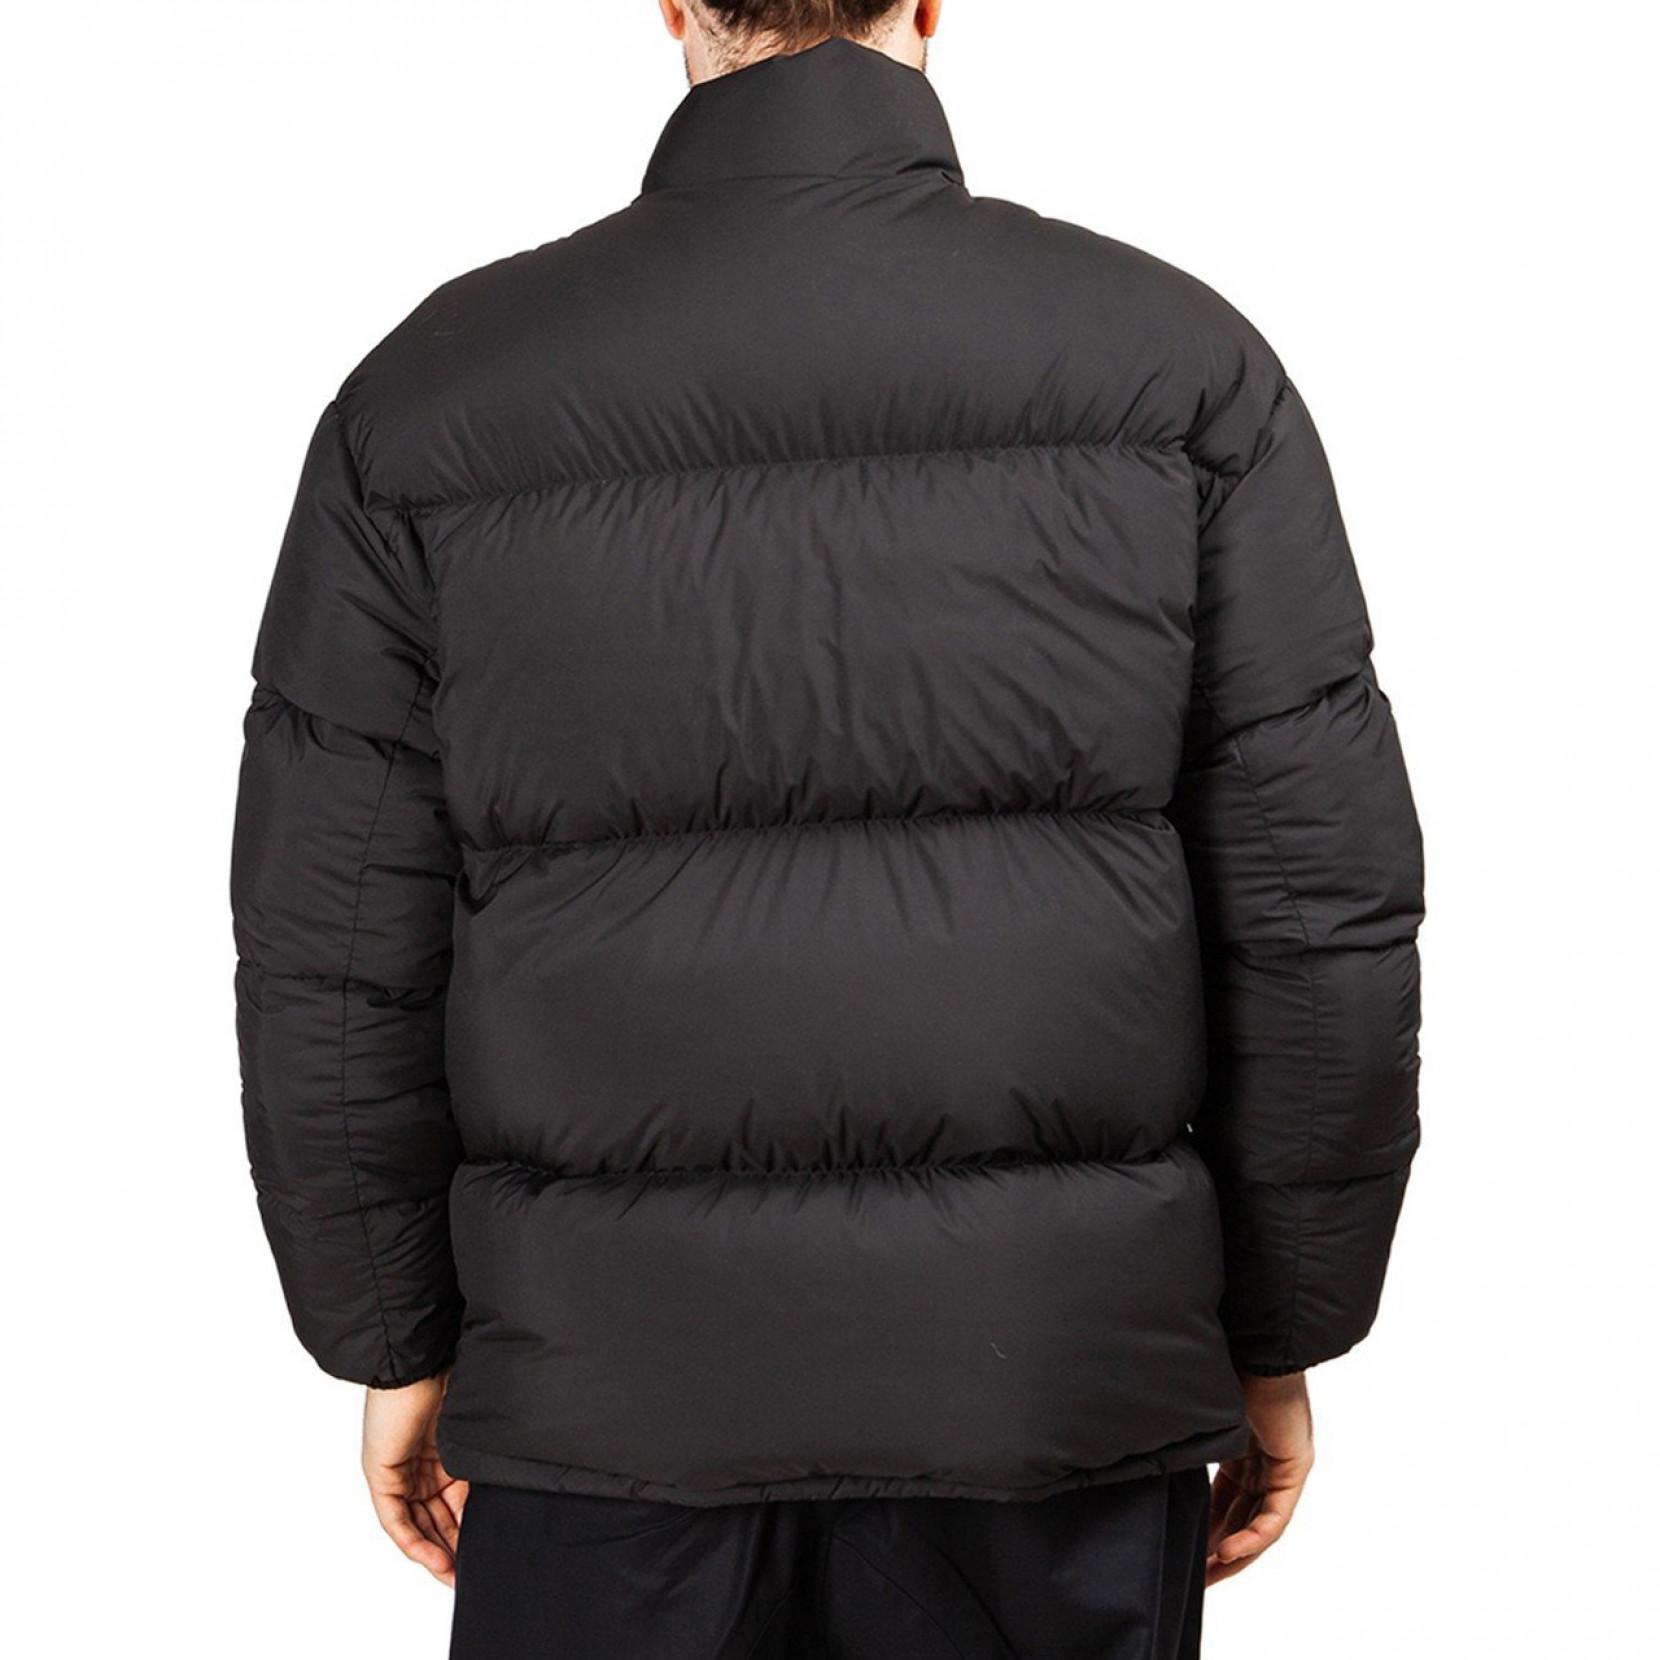 Nike Synthetic Nikelab Nrg Reversible Puffer Jacket in Black for Men - Lyst